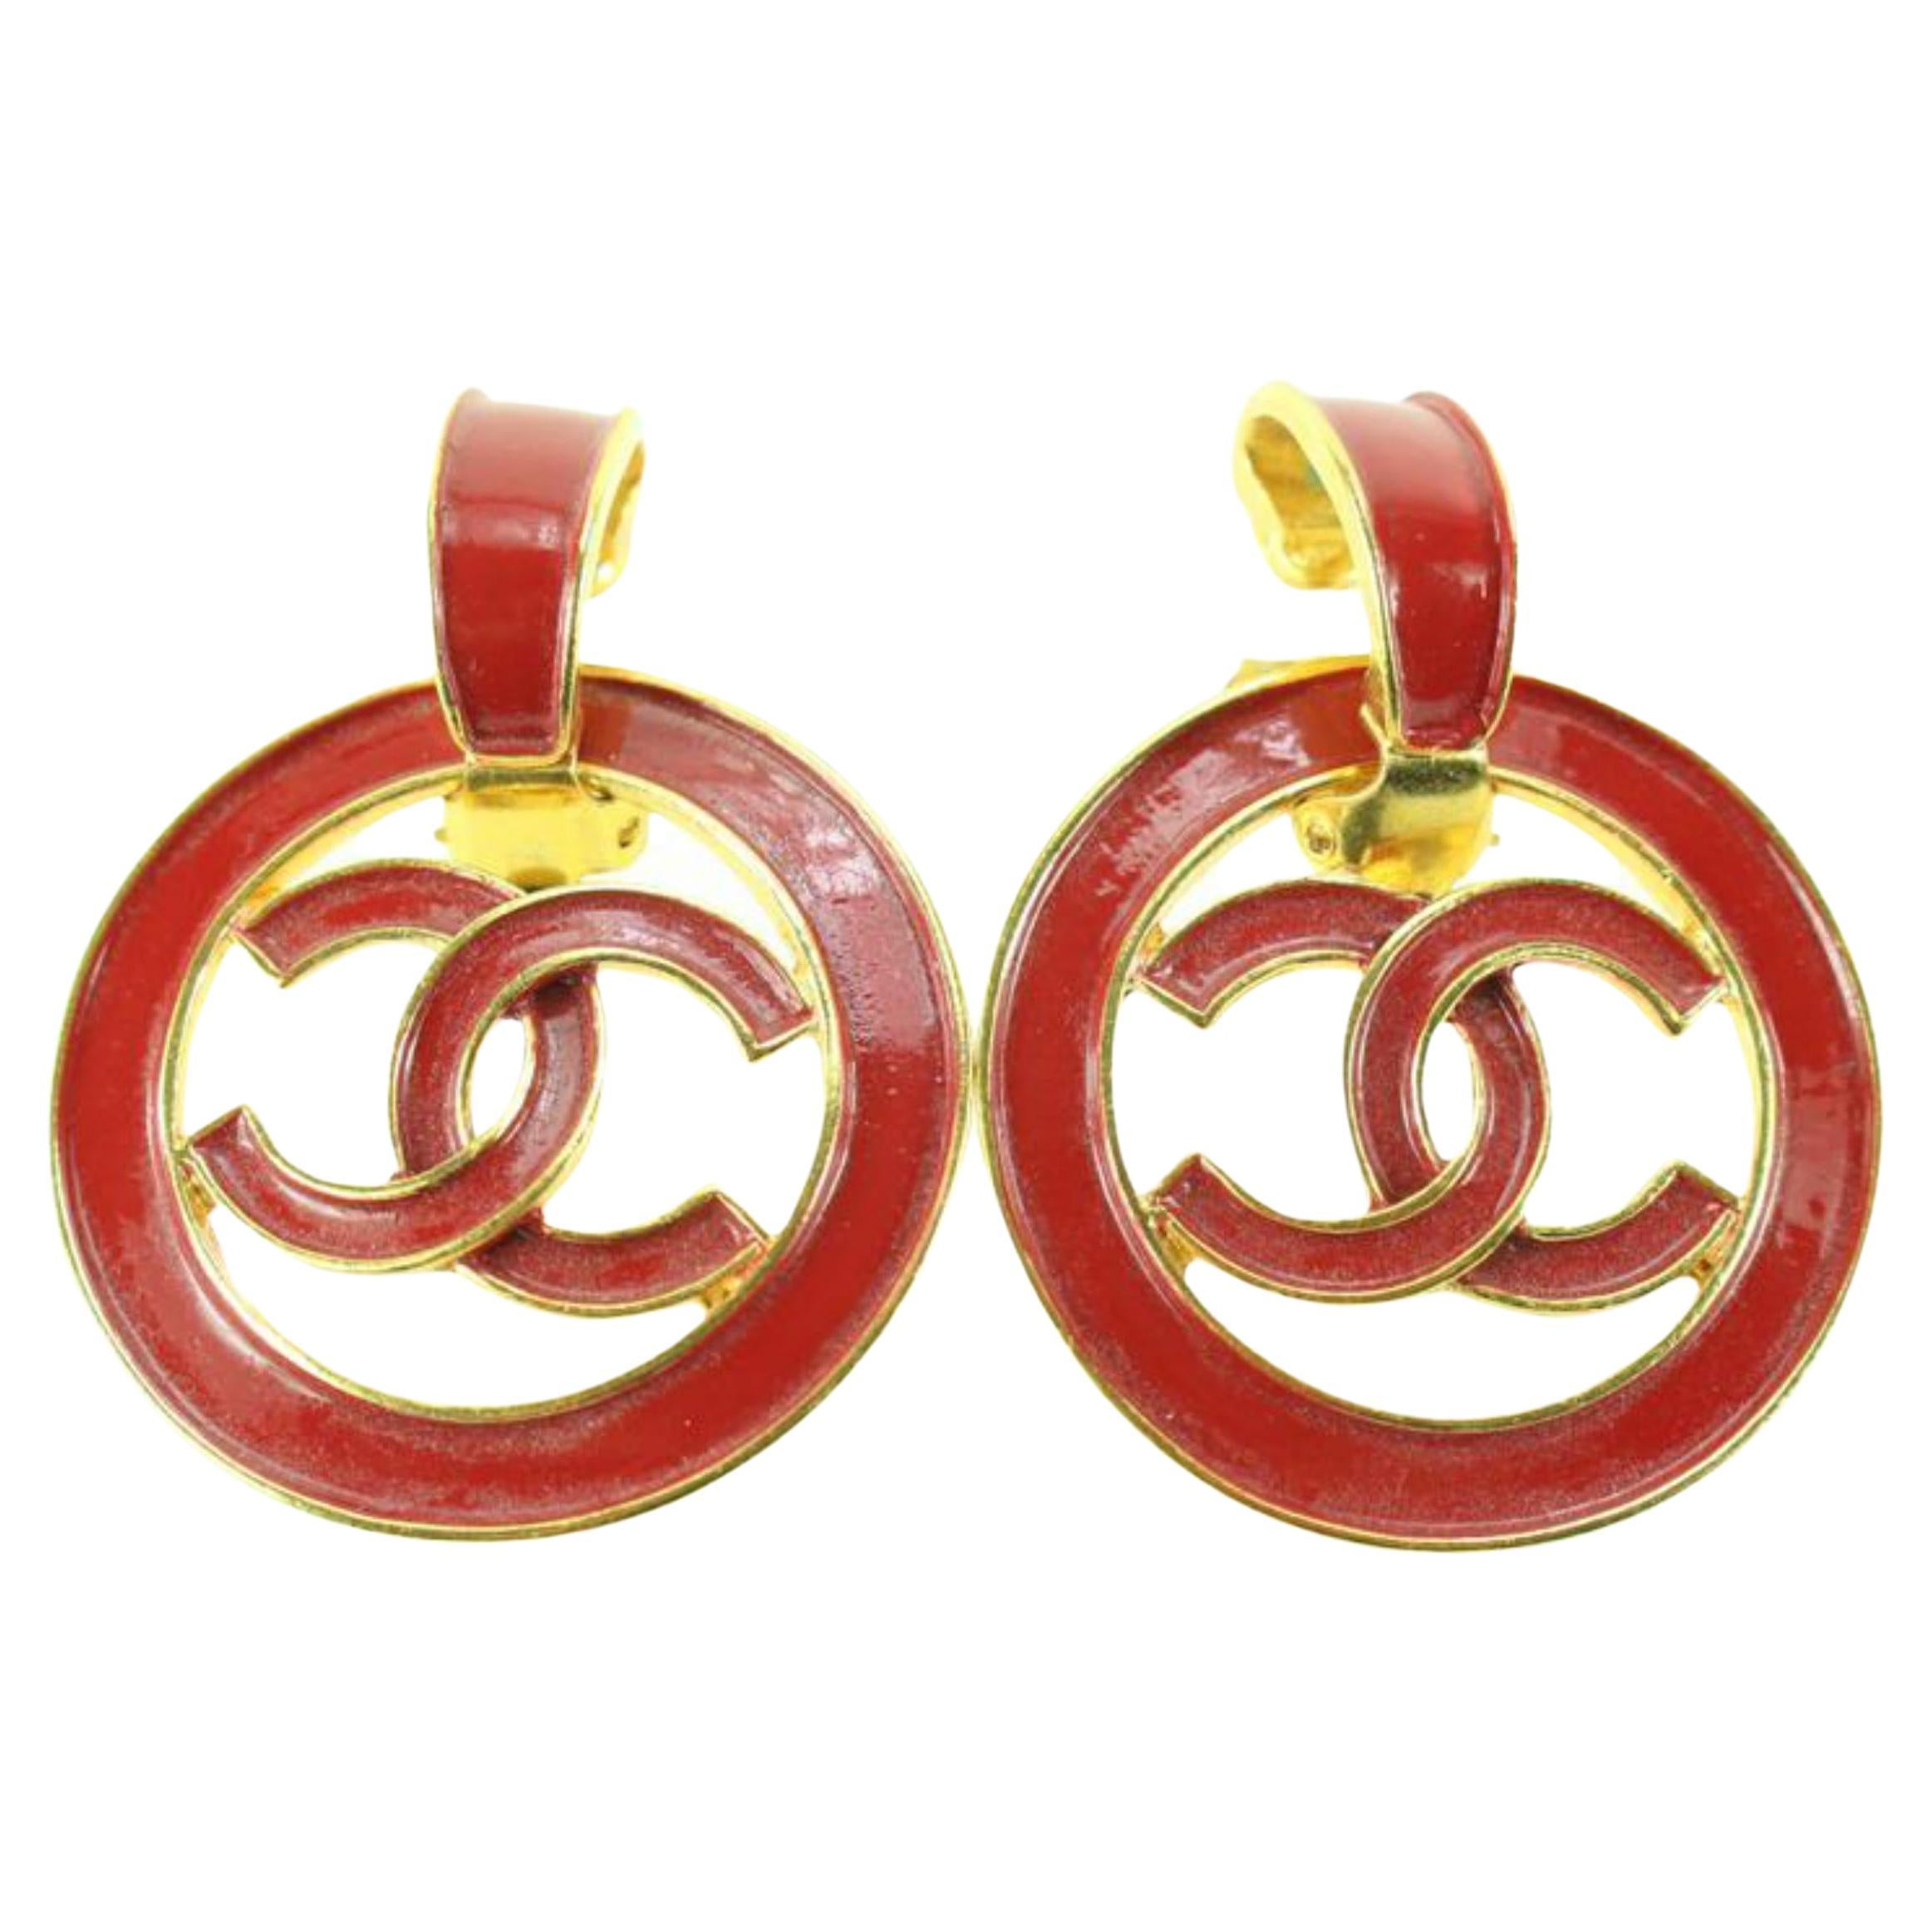 Chanel Earrings C C - 2 For Sale on 1stDibs